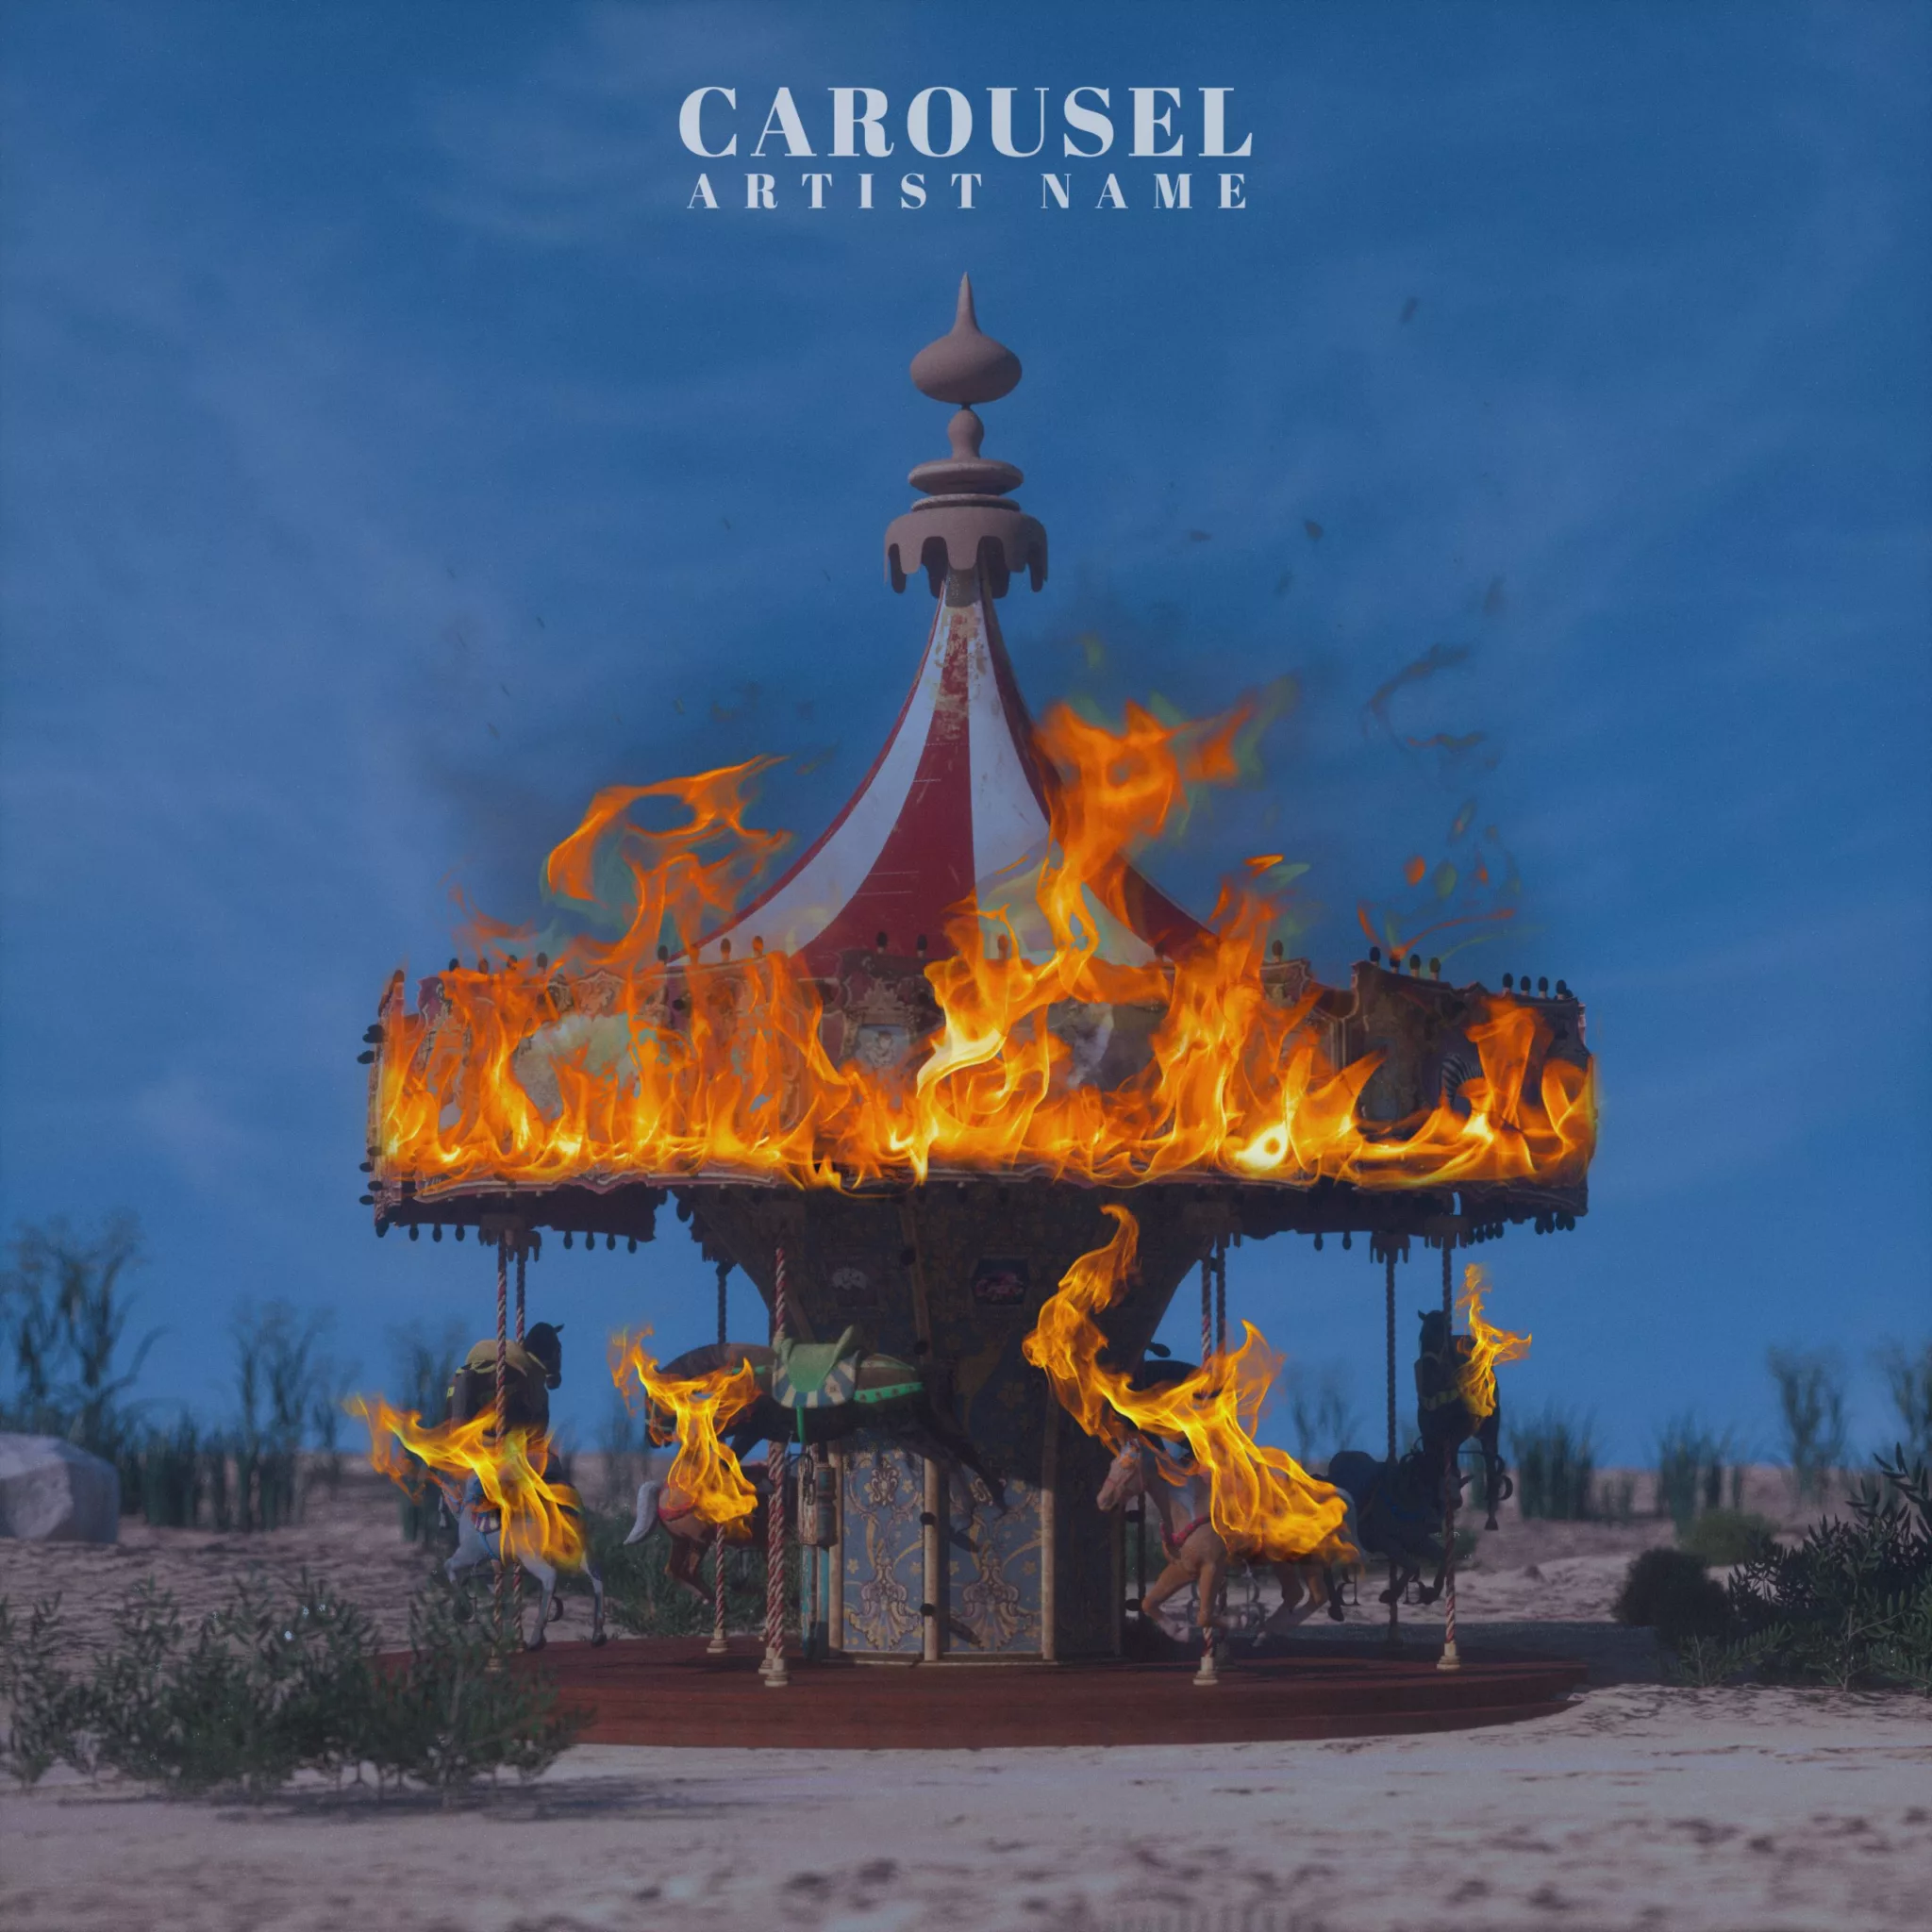 Carousel cover art for sale